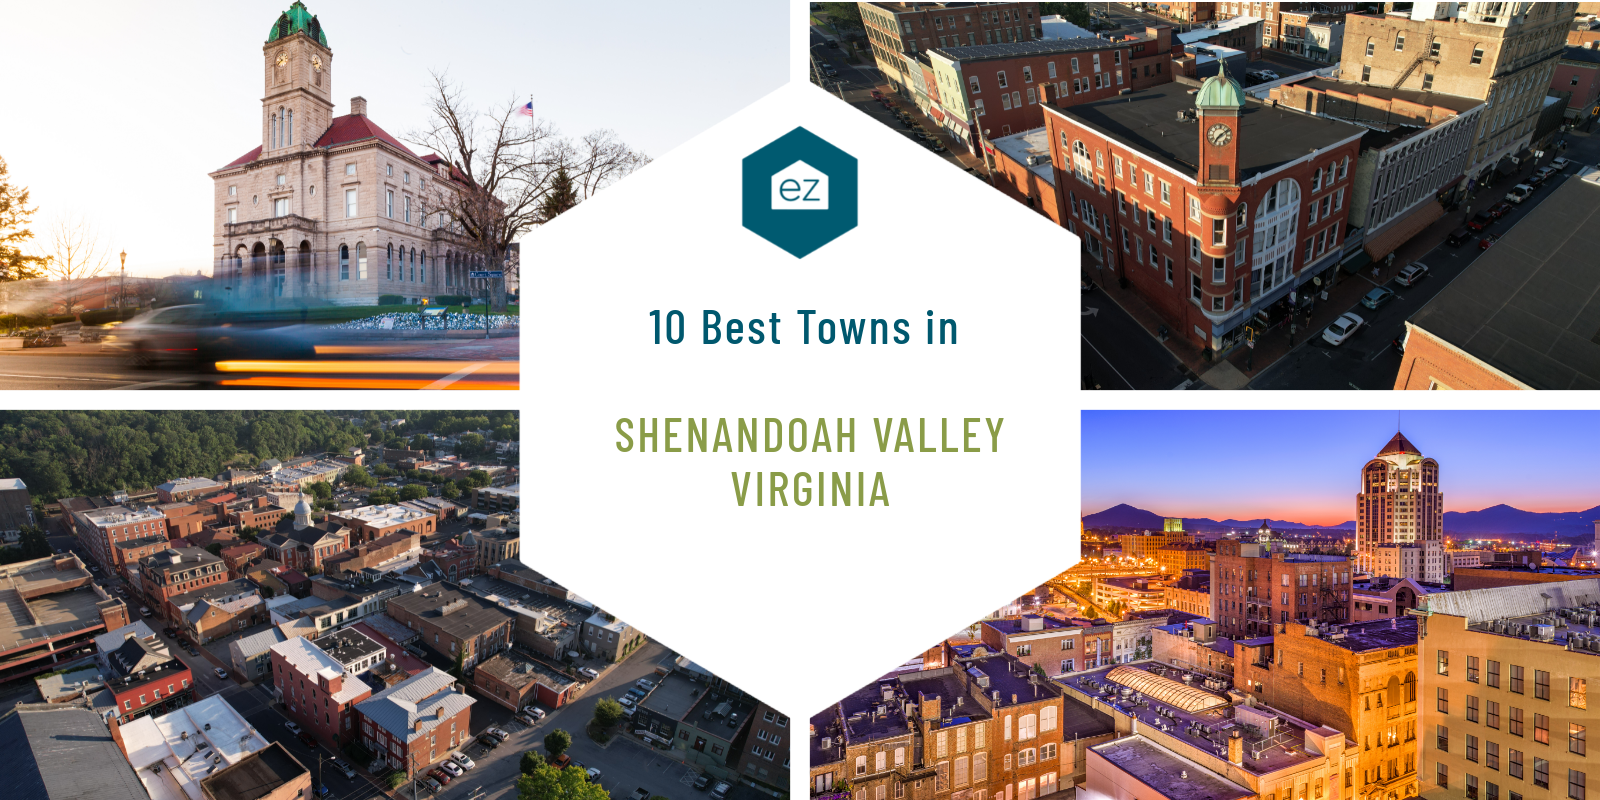 Best Towns to Visit in Shenandoah Valley, VA